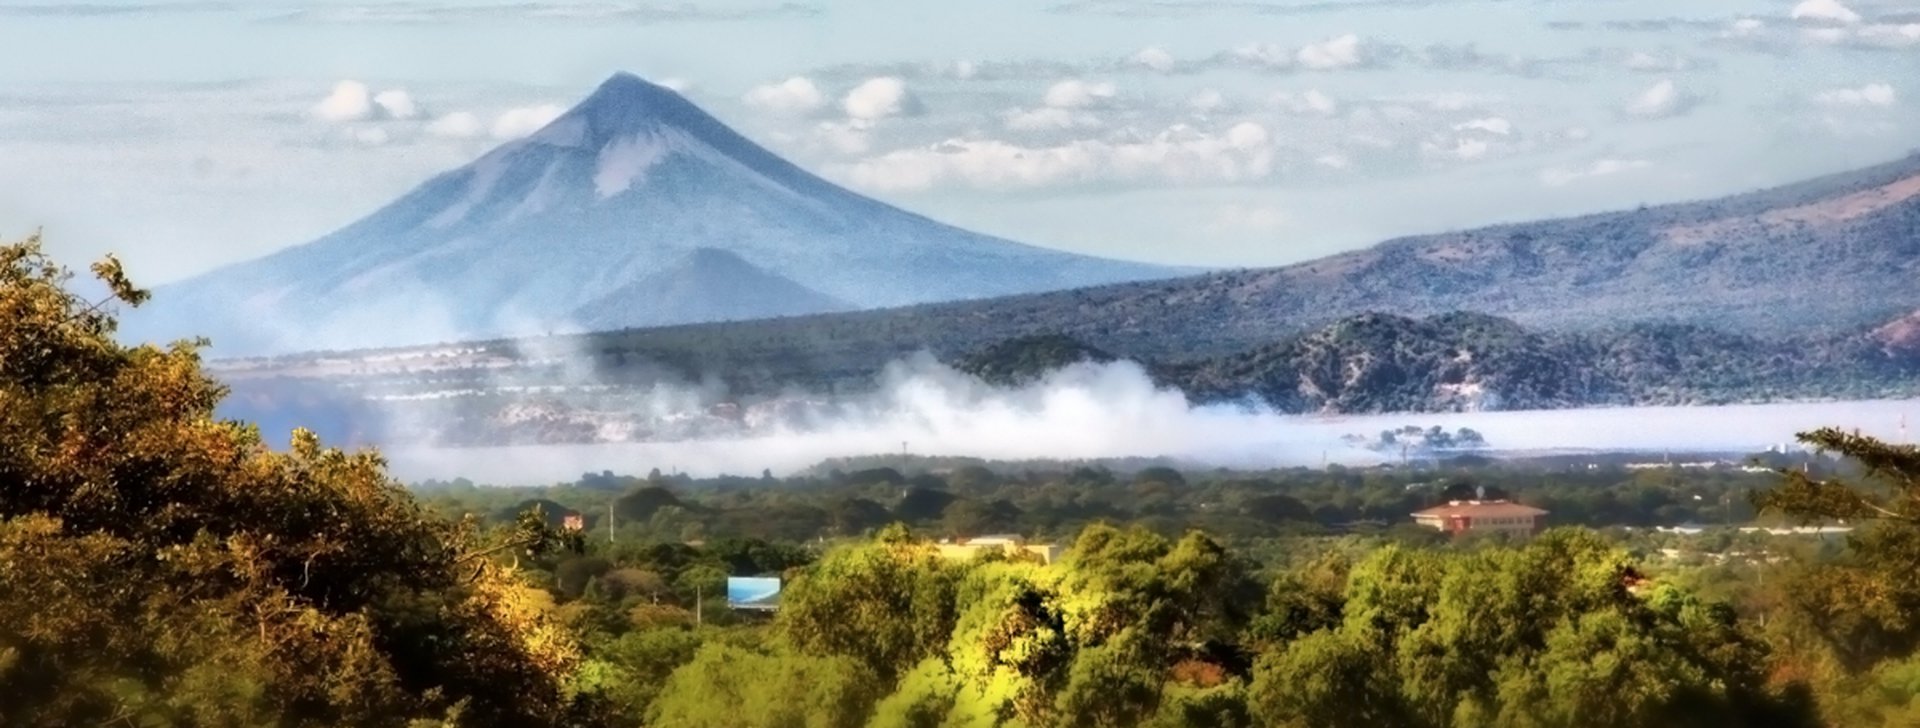 Reiseziele Nicaragua